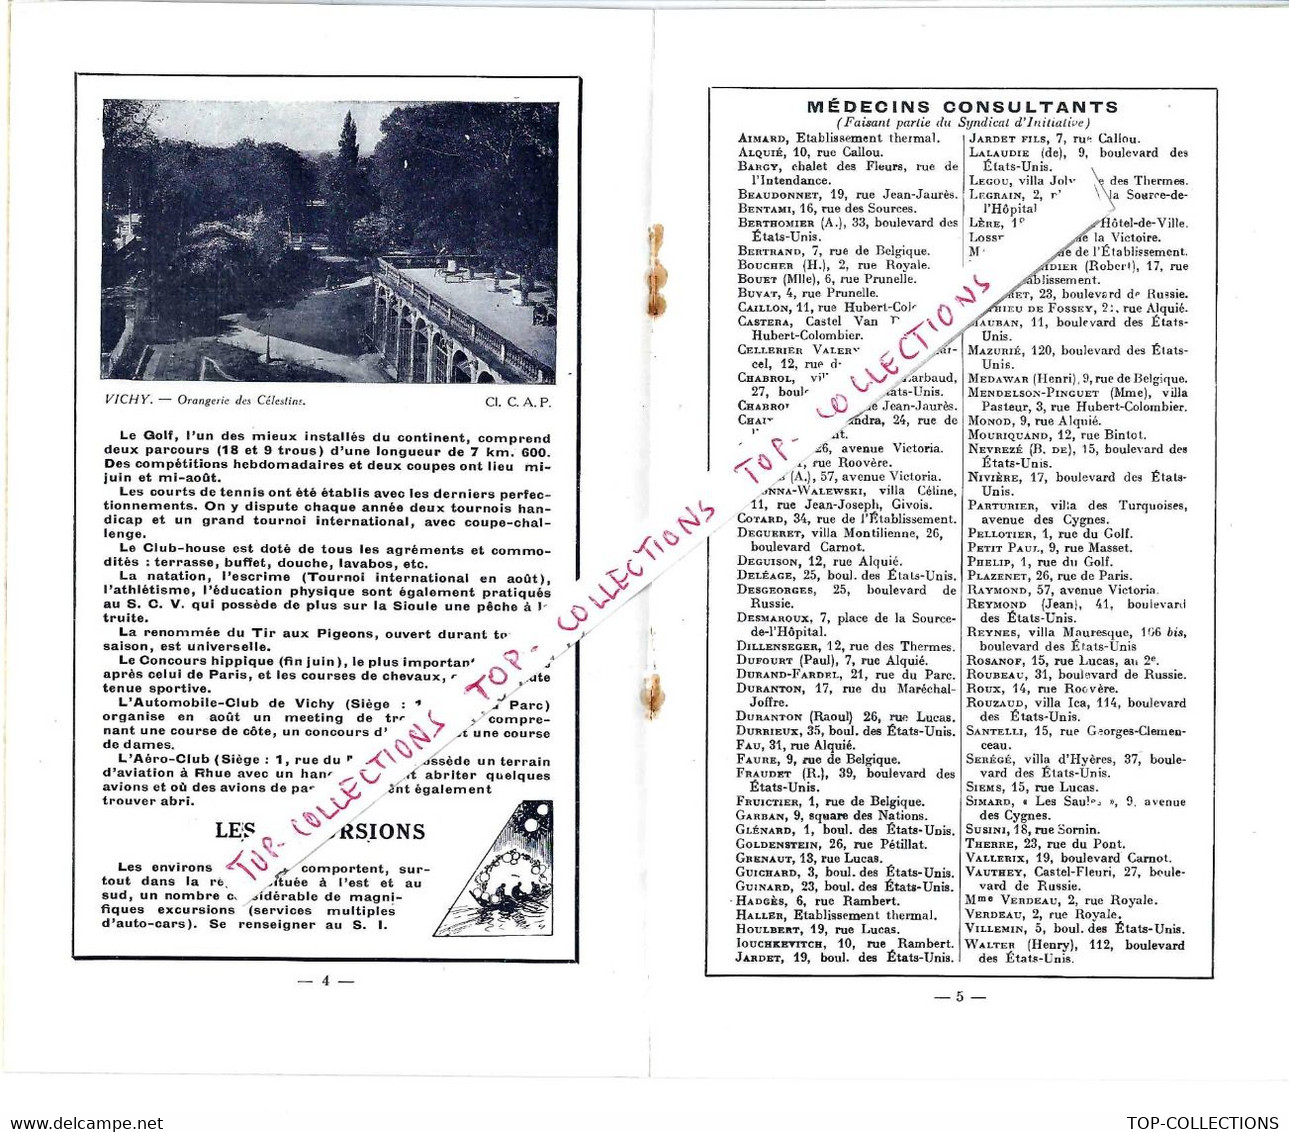 Vichy Circa 1925 ART DECO PLAQUETTE Du Syndicat D’initiative AVEC PLAN B.E.V.SCANS - Toeristische Brochures